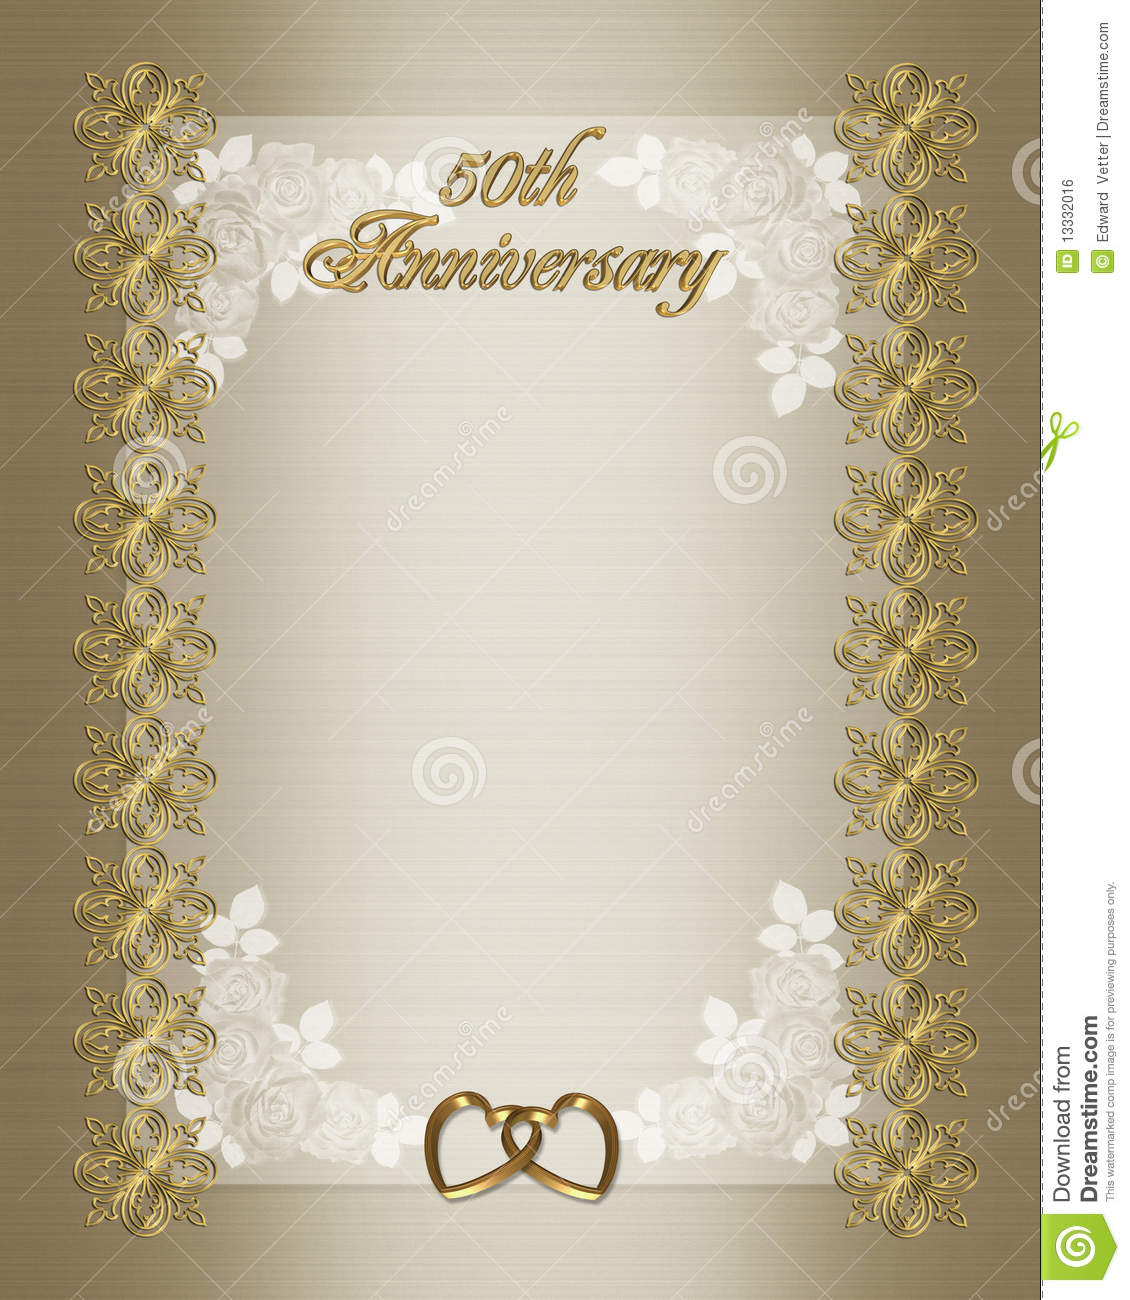 50th Wedding Anniversary Invitation Template Stock Illustration pertaining to sizing 1130 X 1300